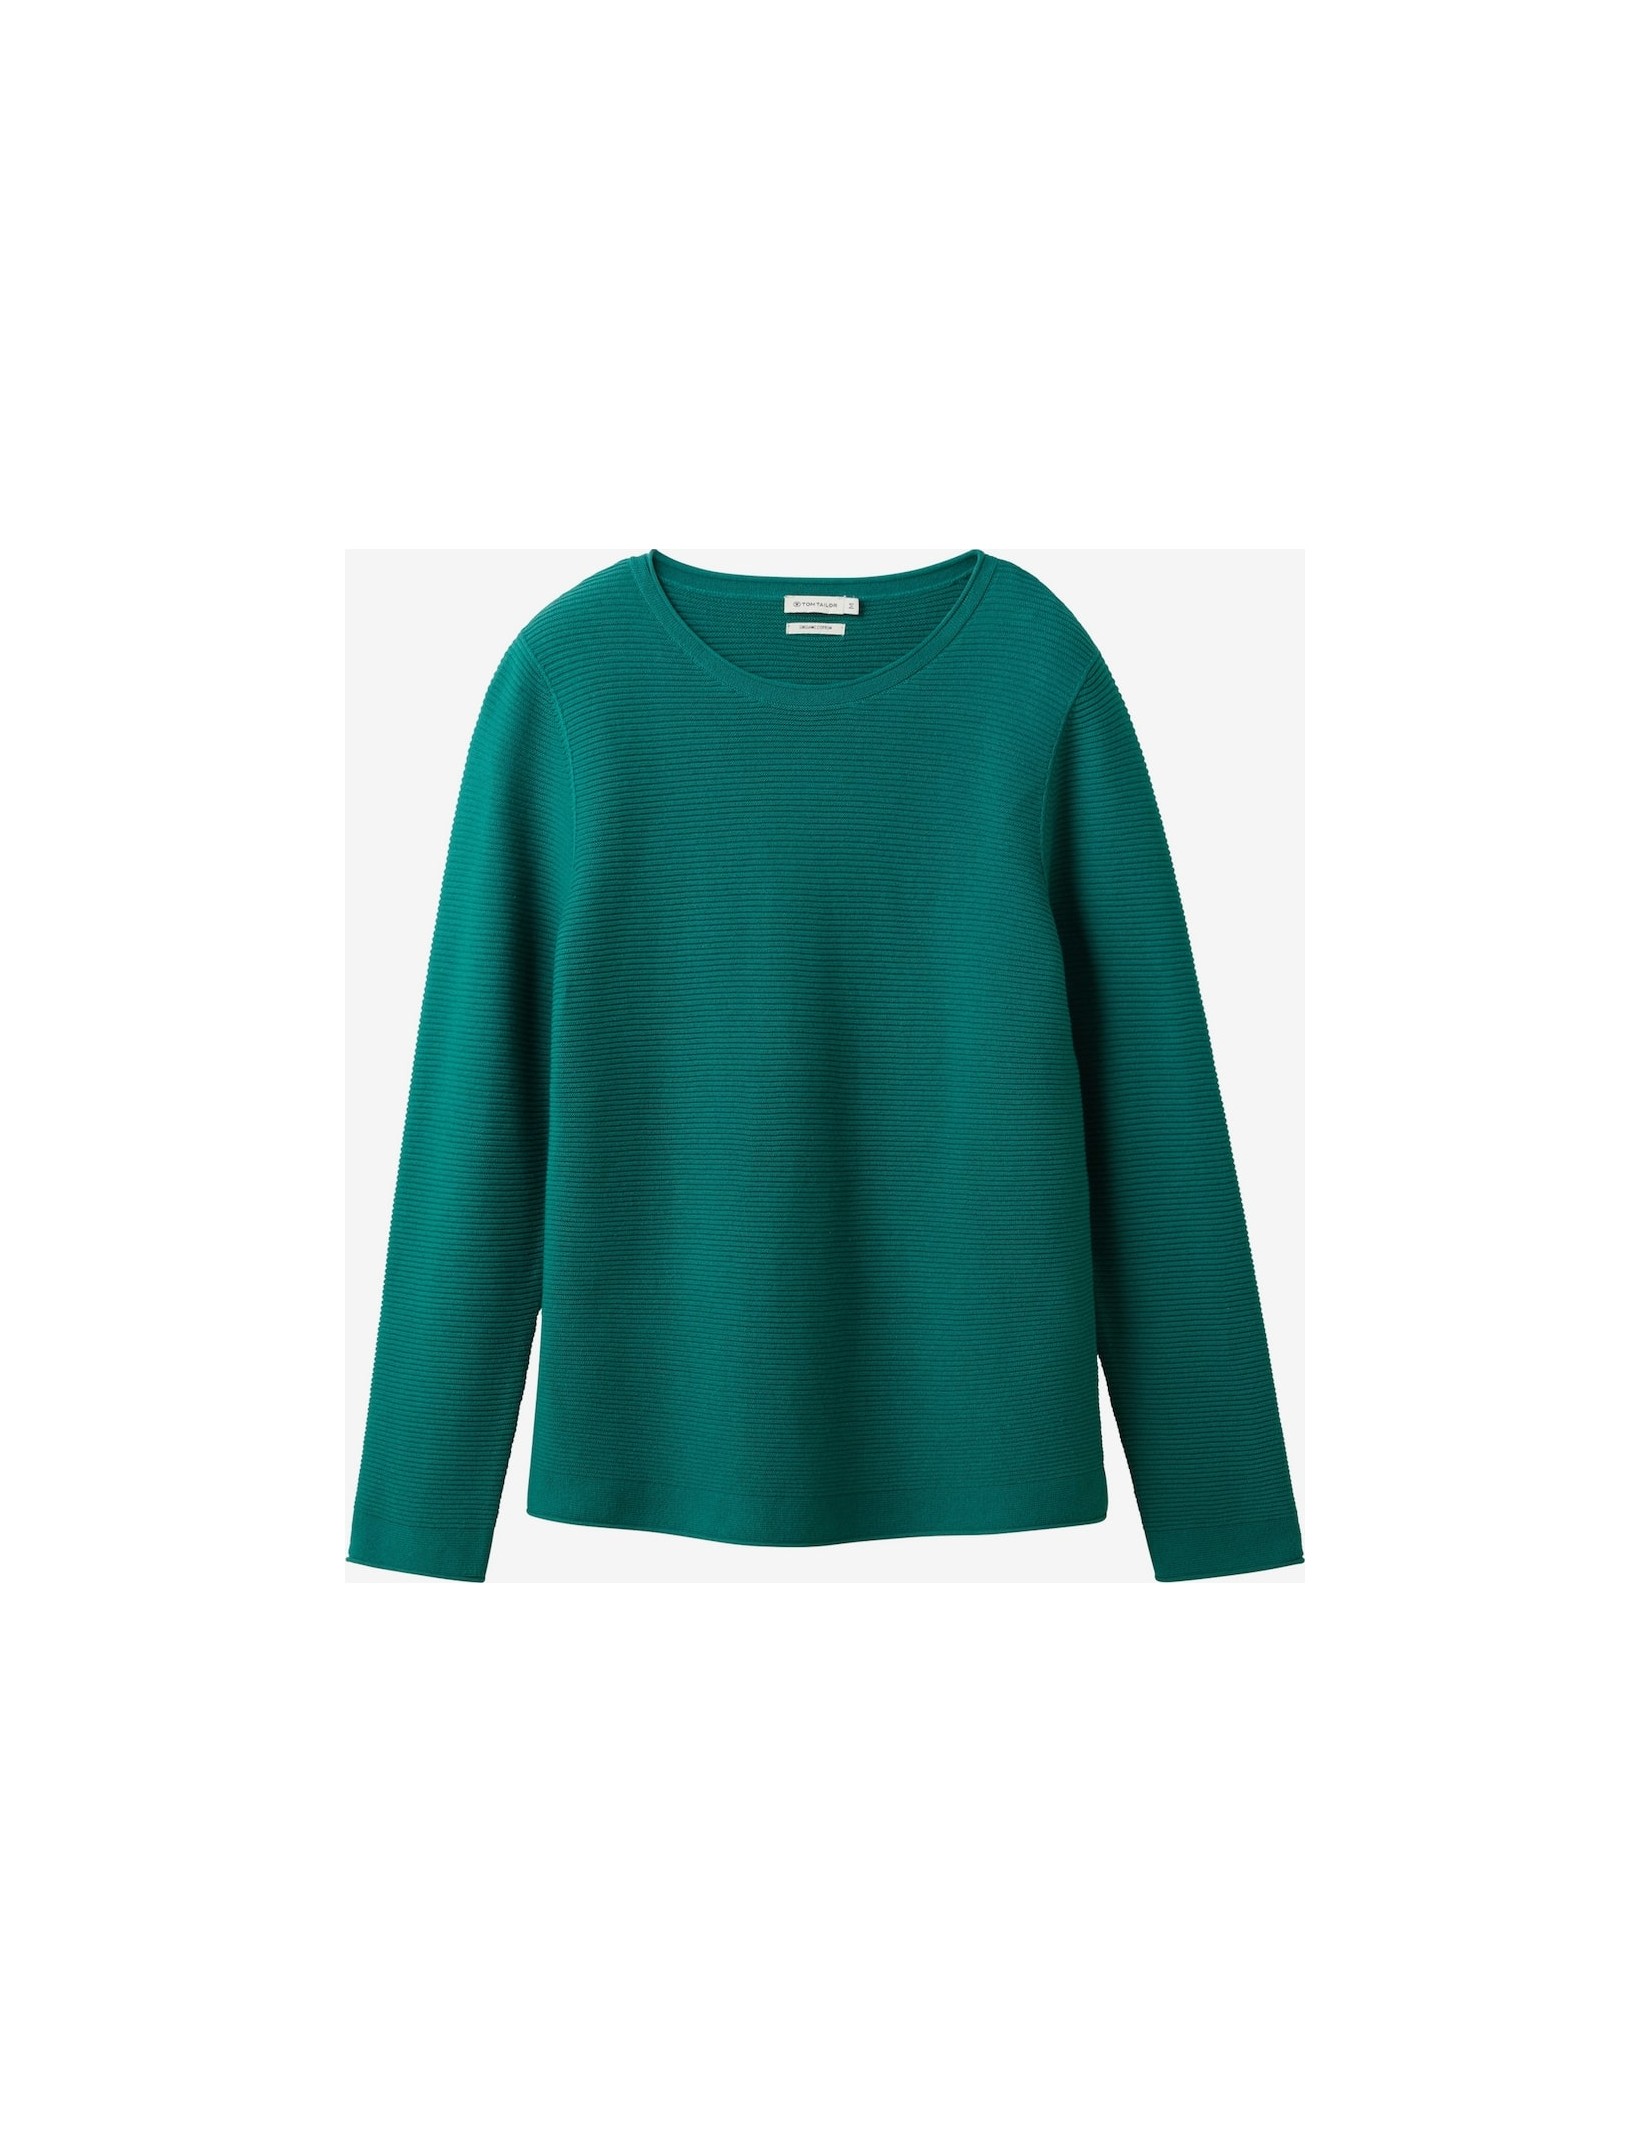 TOM TAILOR Simple sweatshirt 1016350-21178 | BON FASHION